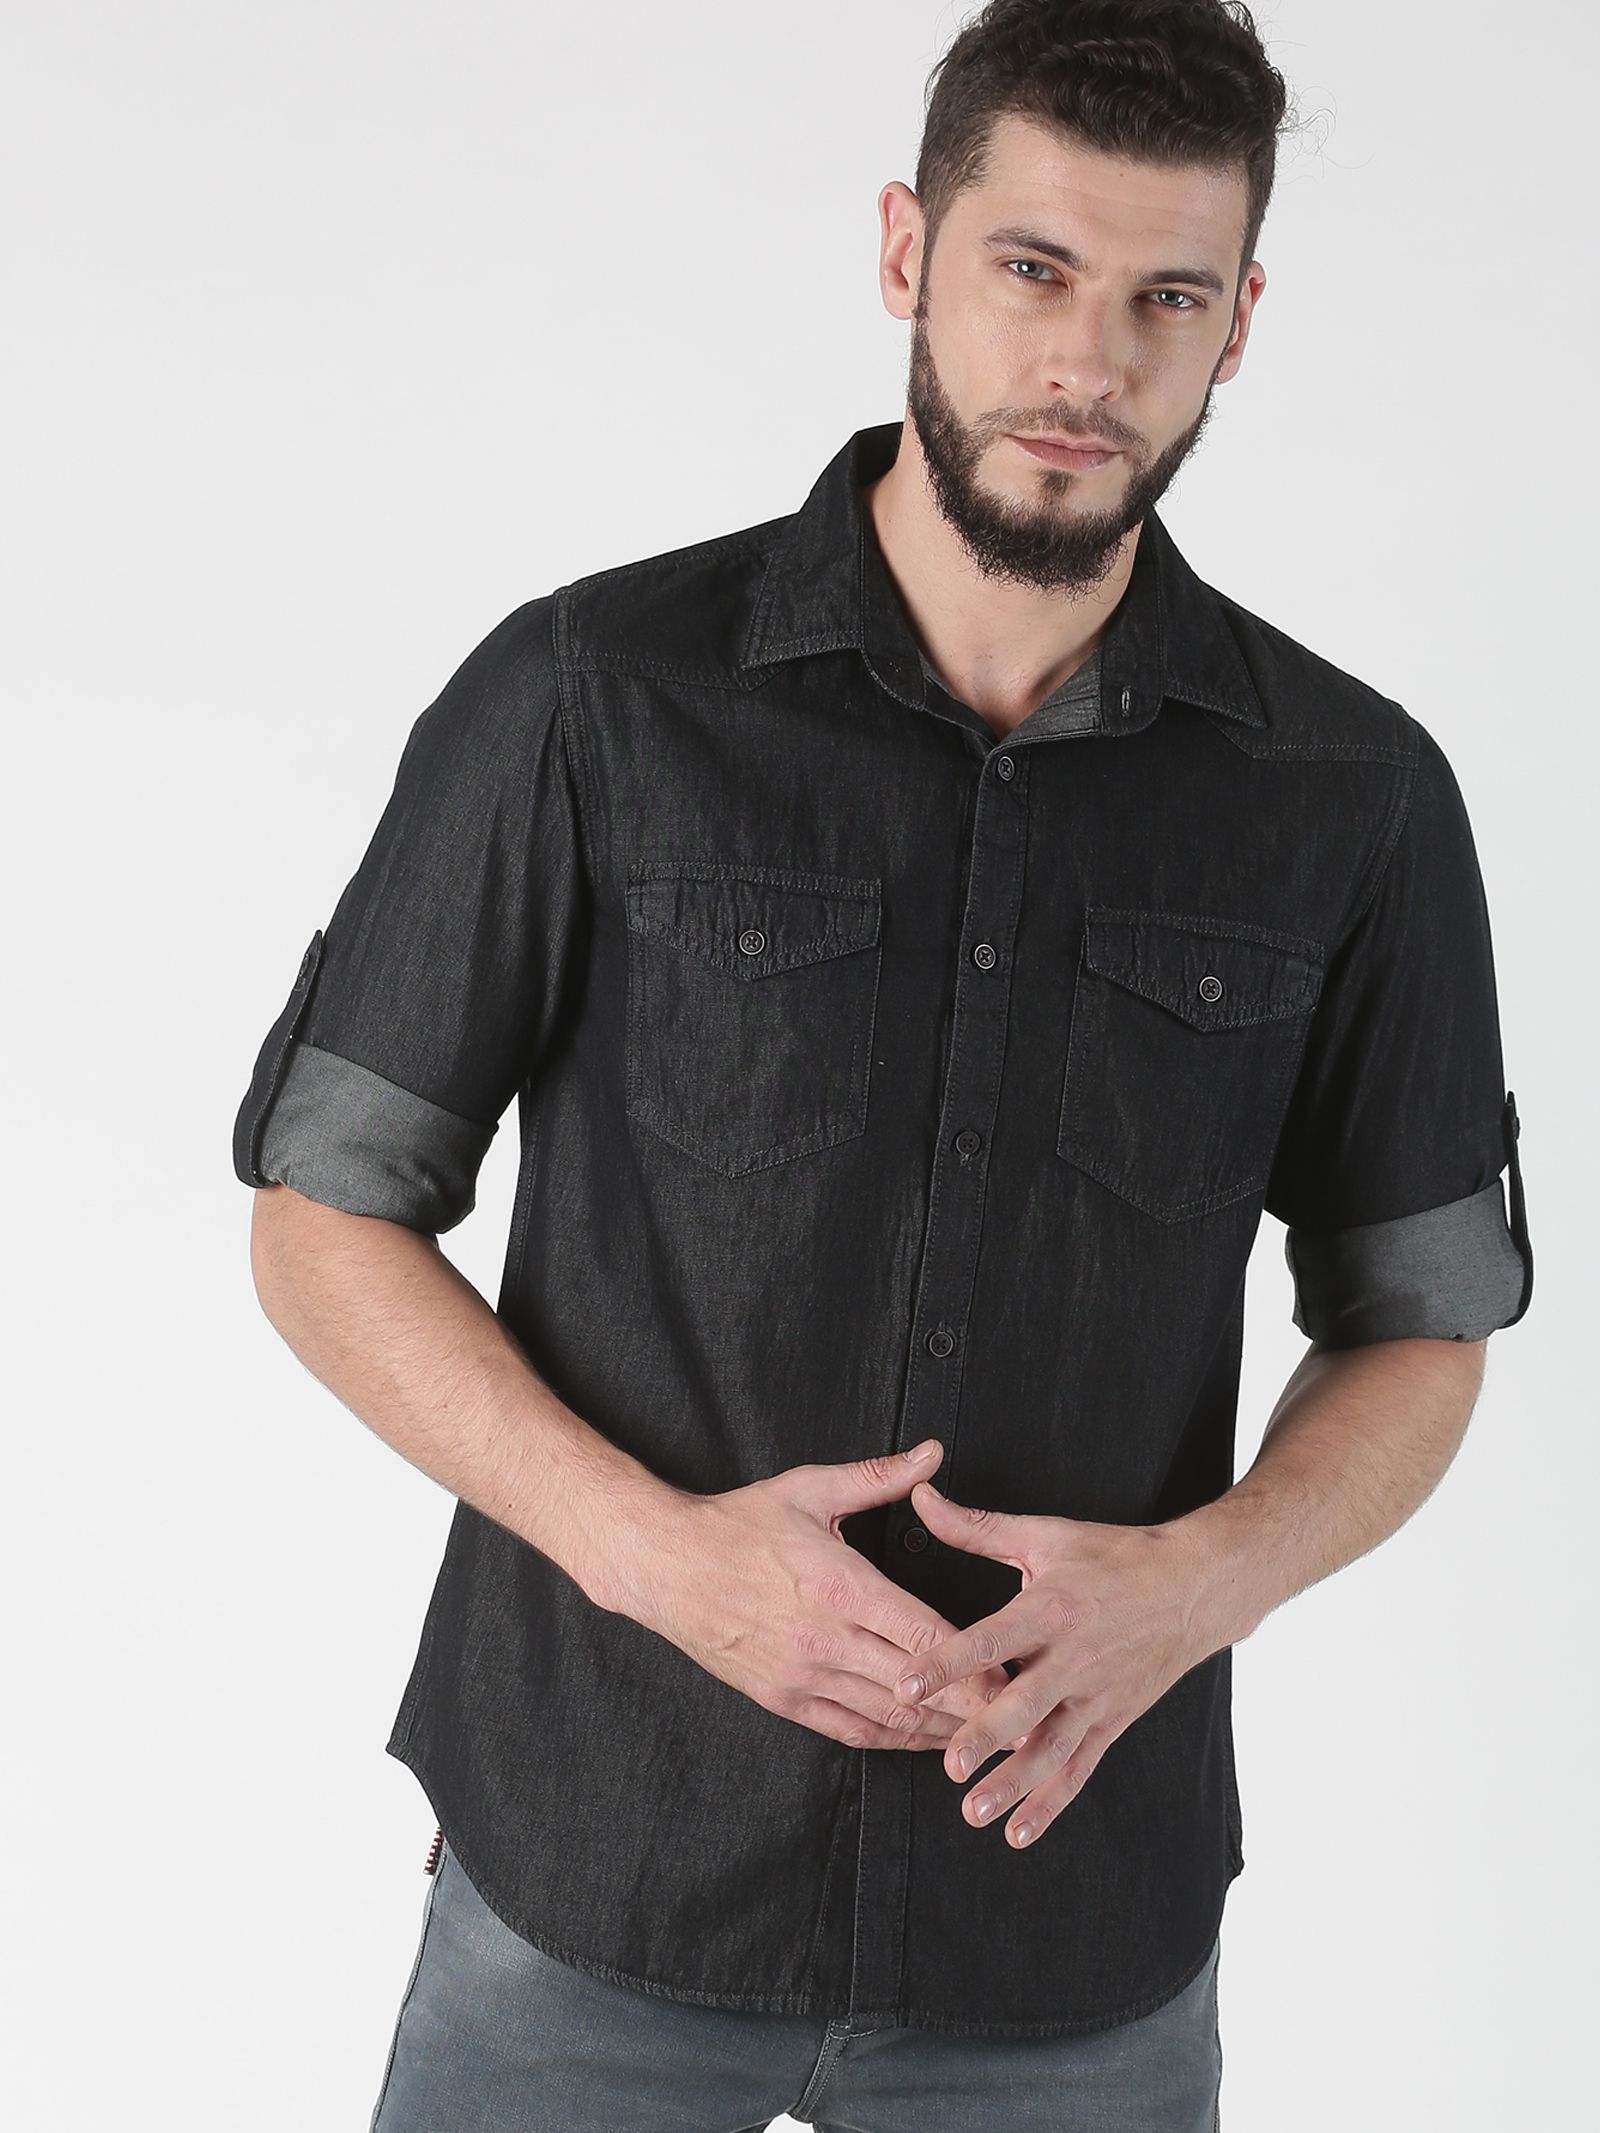     			OJASS Denim Regular Fit Solids Rollup Sleeves Men's Casual Shirt - Black ( Pack of 1 )